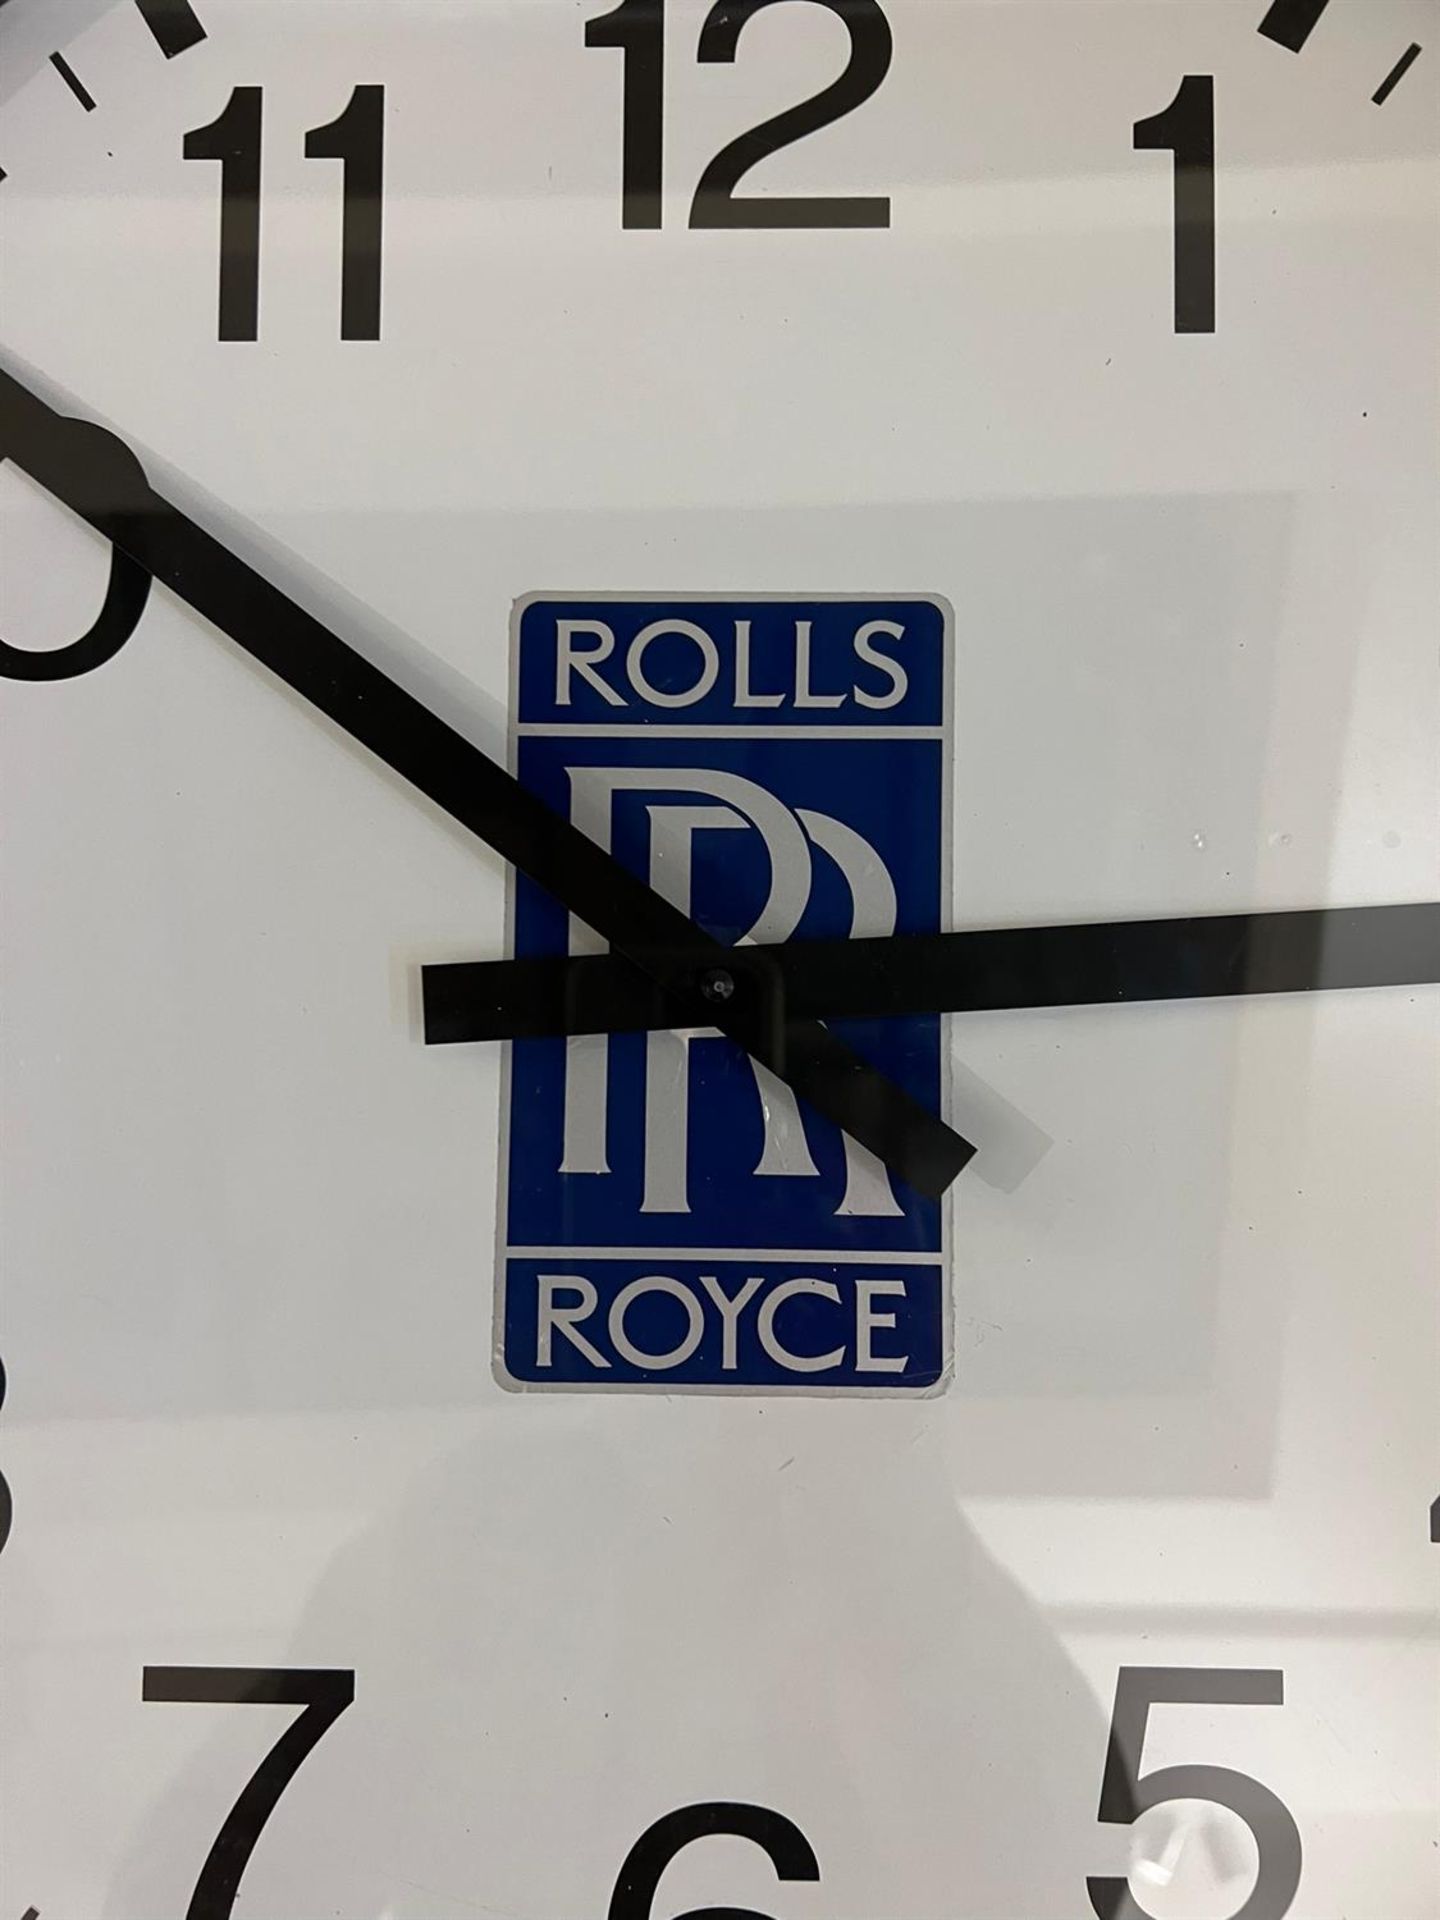 A Rolls-Royce Themed Large Quartz Dealership-Type Wall Clock - Image 2 of 7